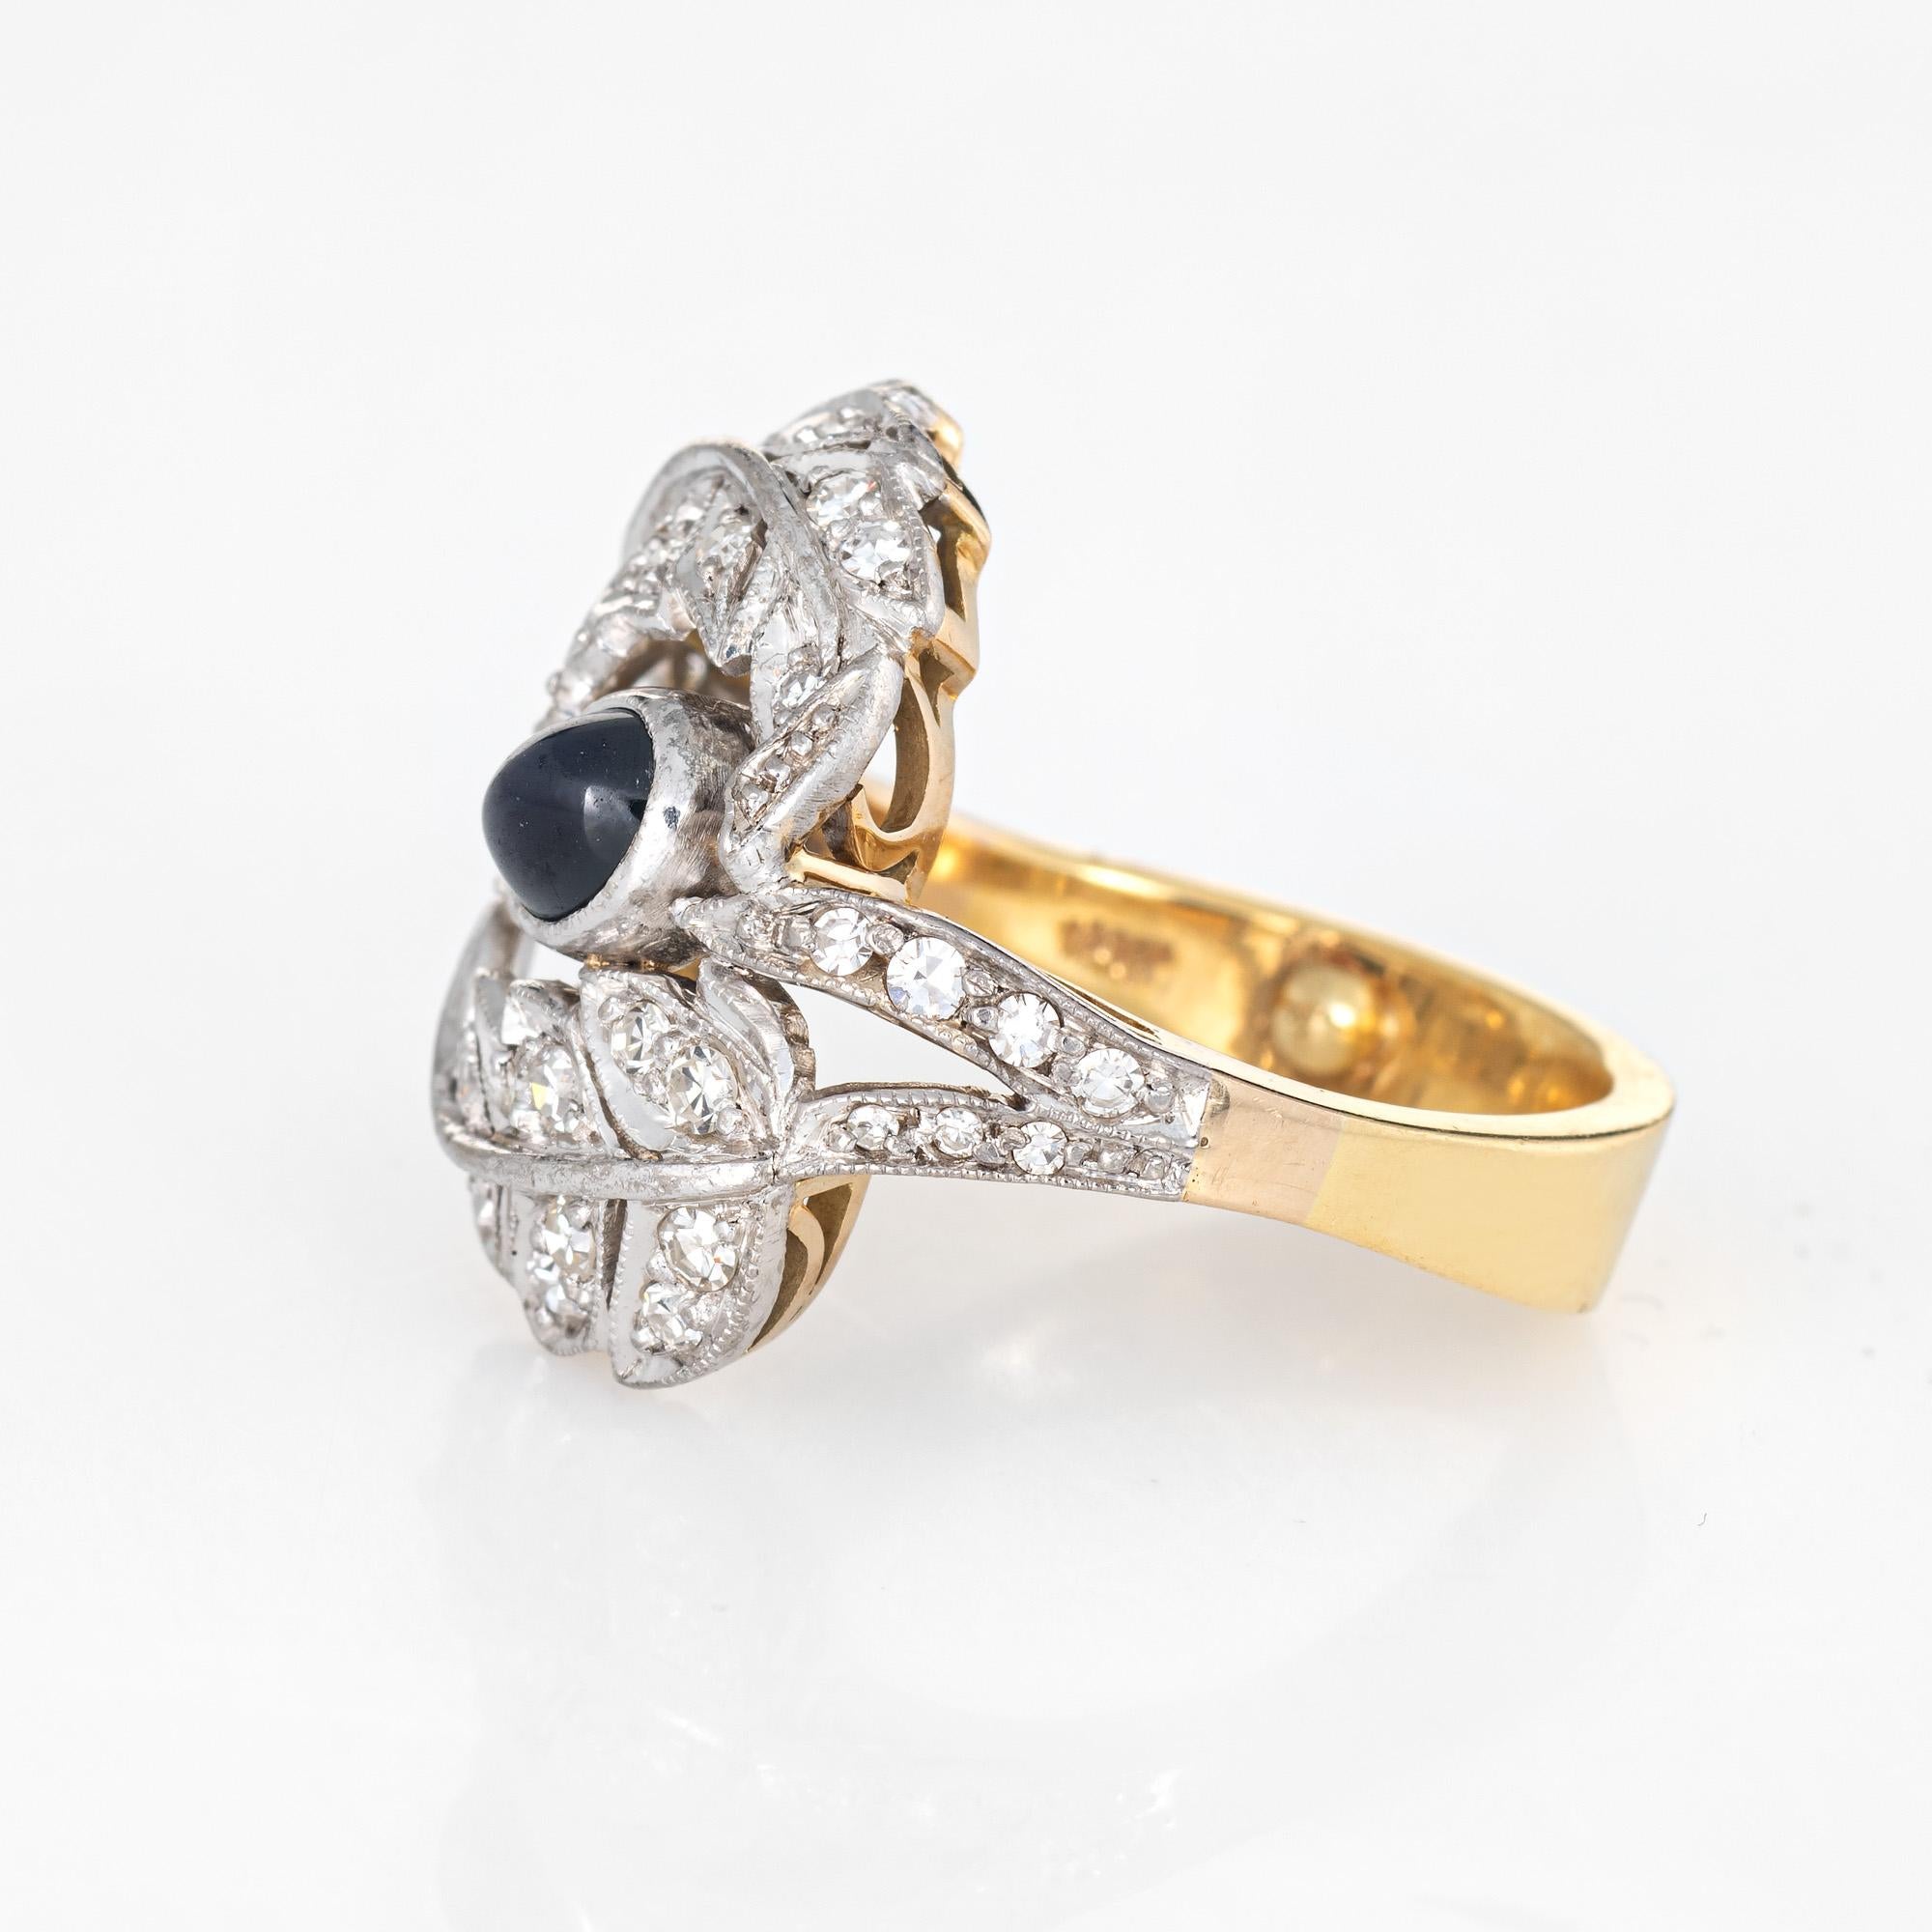 Oval Cut Sapphire Diamond Leaf Ring Vintage 18 Karat Yellow Gold Estate Fine Jewelry